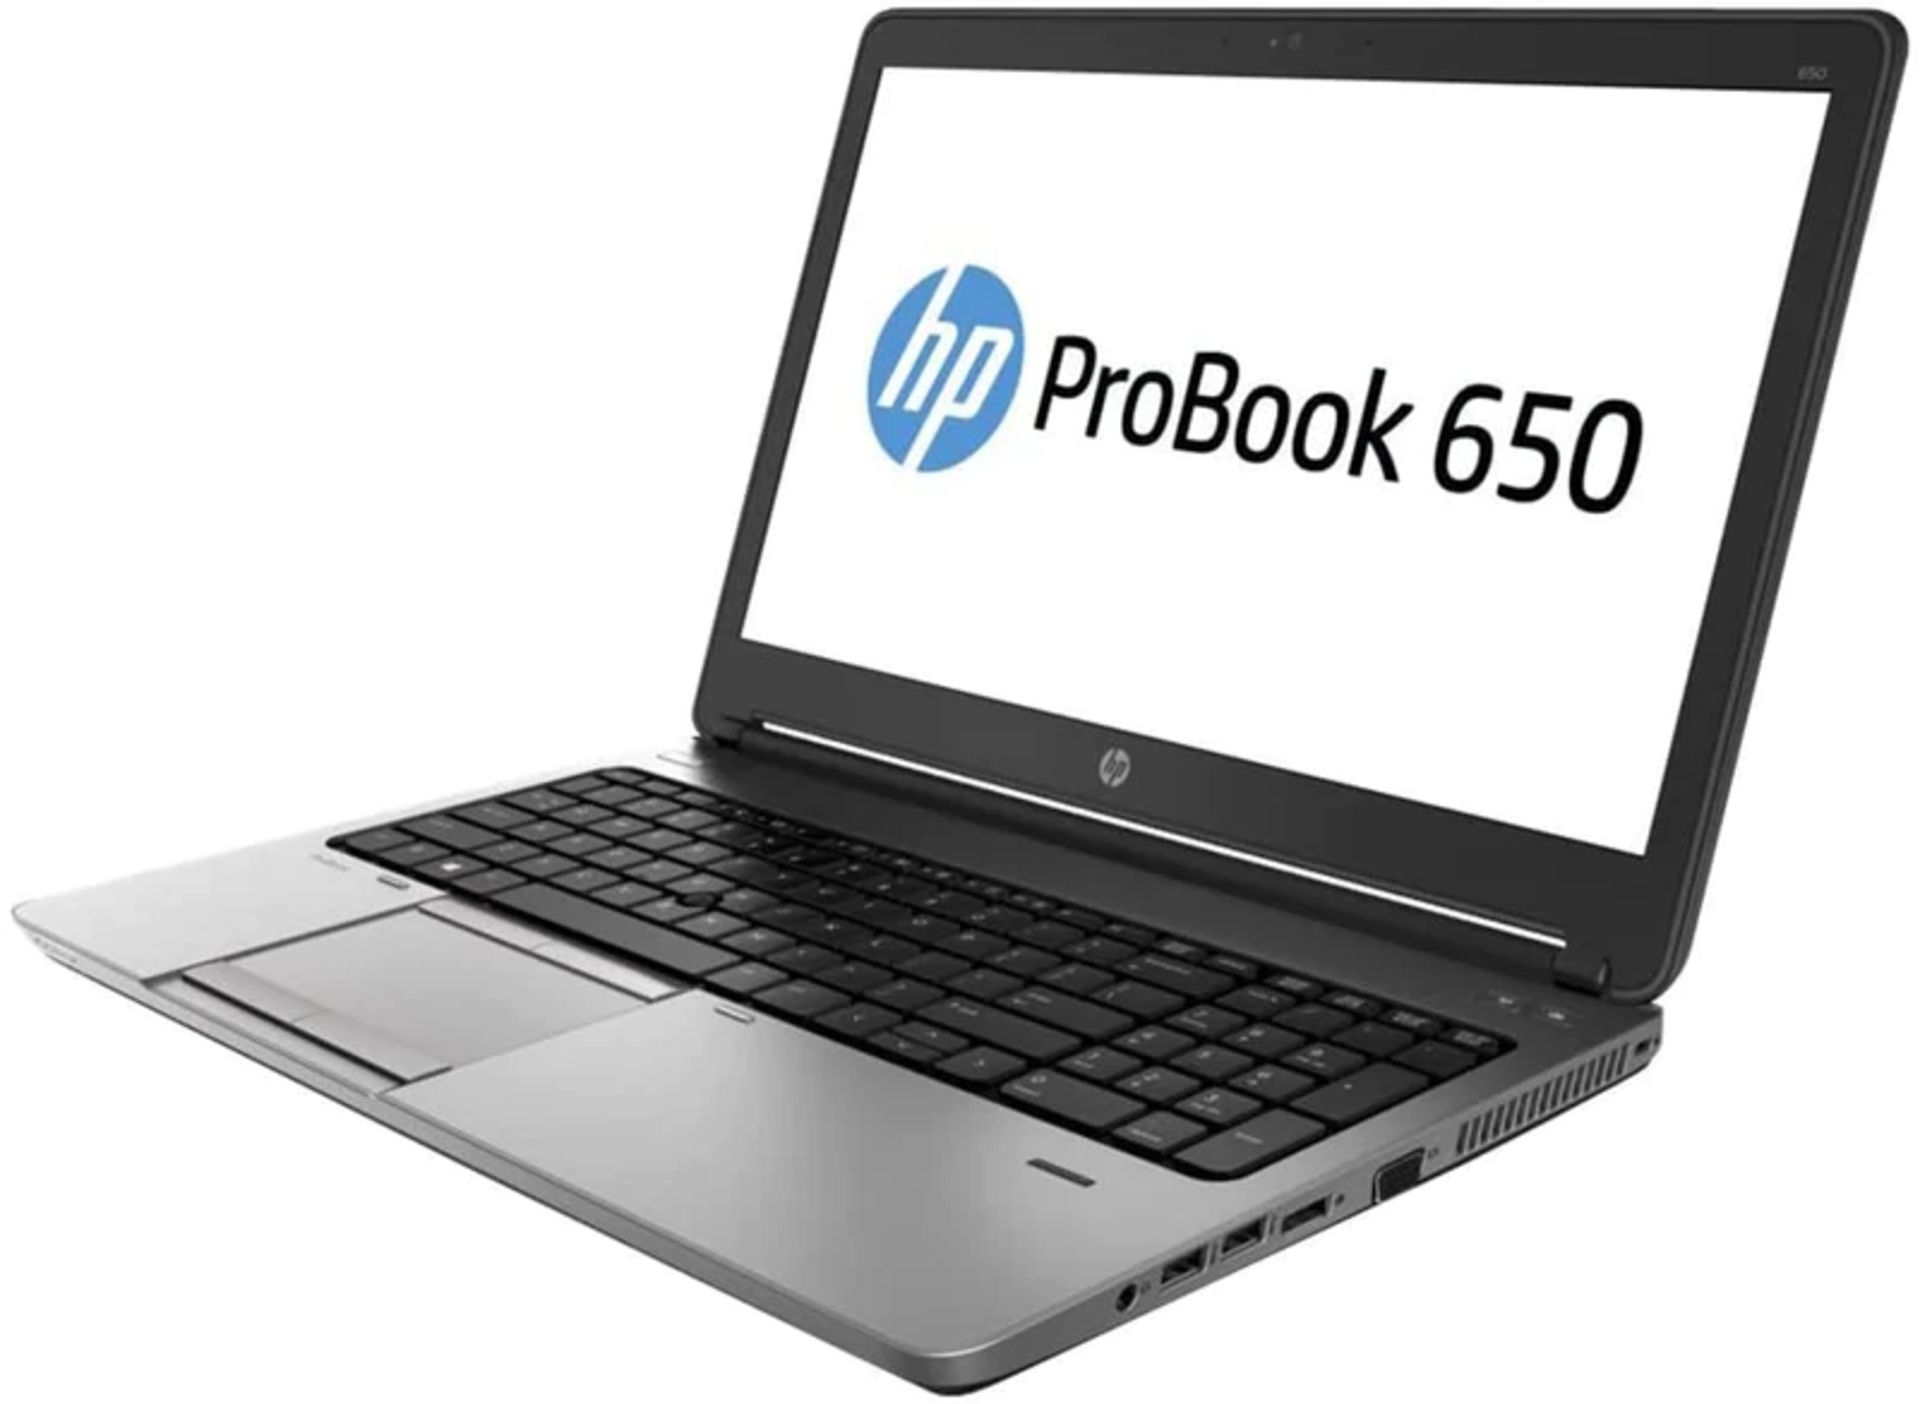 HP 650 G1 Laptop 15.6” Windows 10 Intel Core i5-4210M 4GB 500GB HDMI WiFi Office